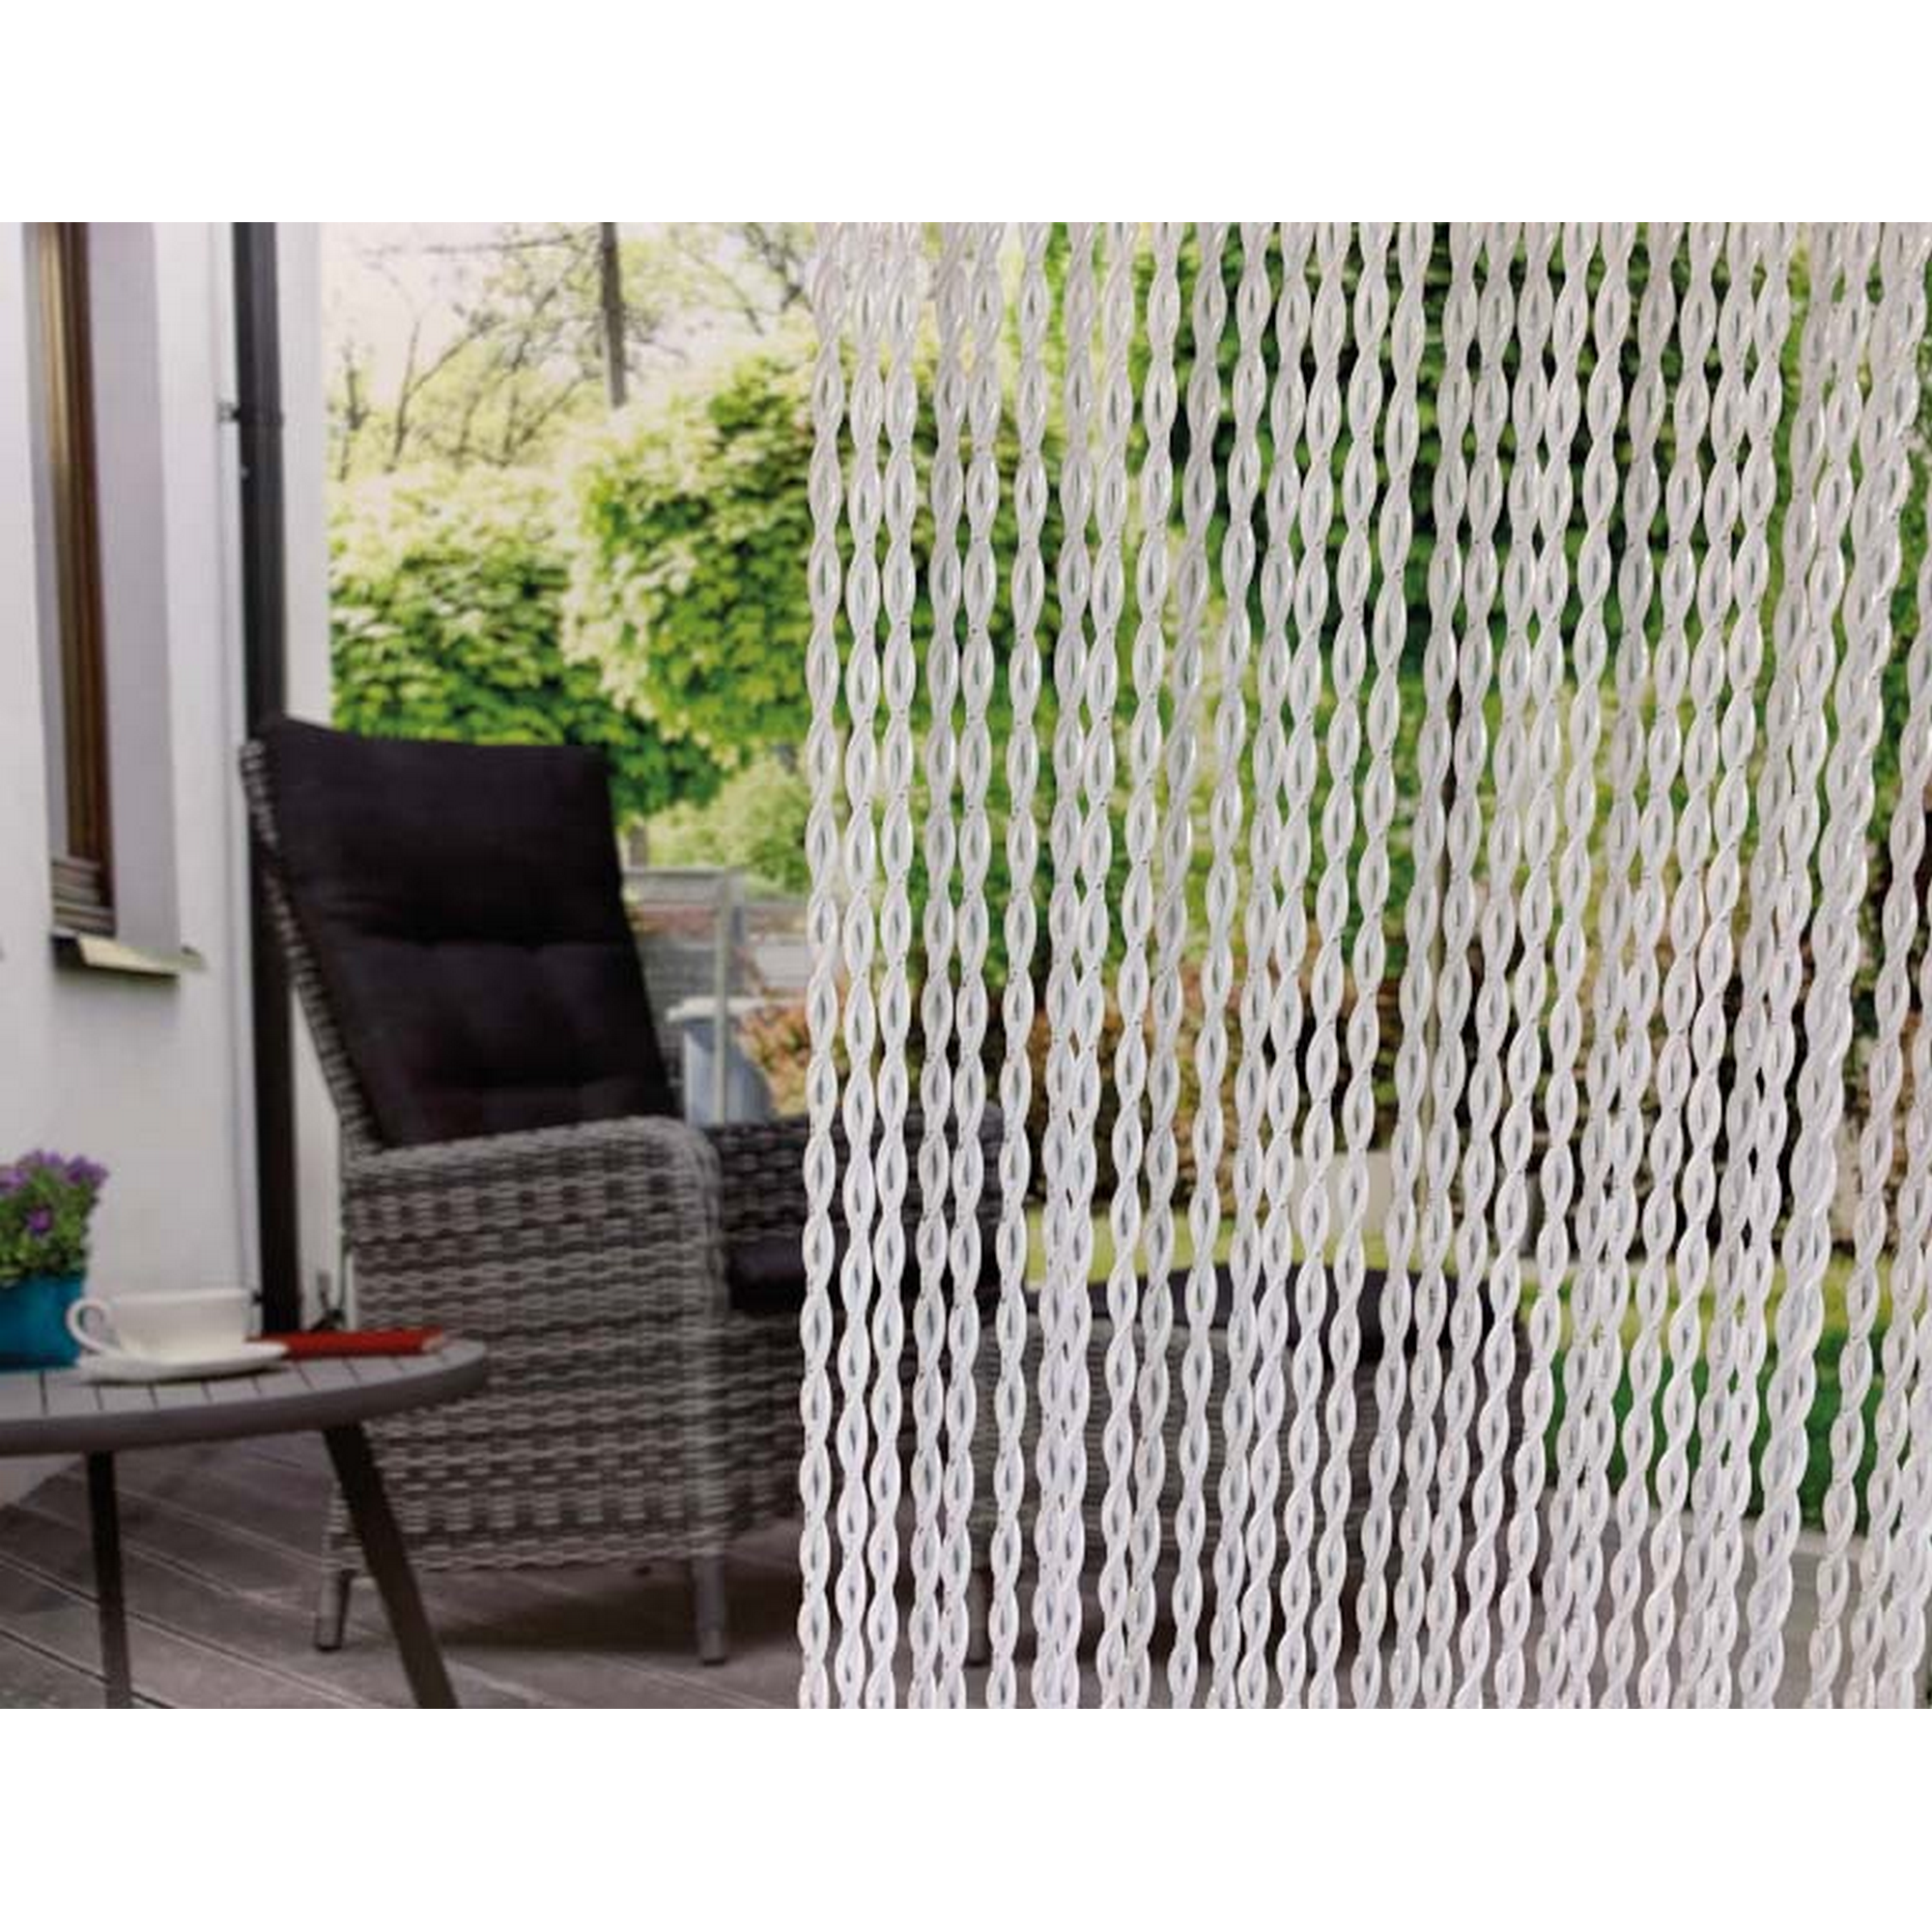 Türvorhang 'Piemonte' tarnsparent/weiß 90 x 210 cm + product picture